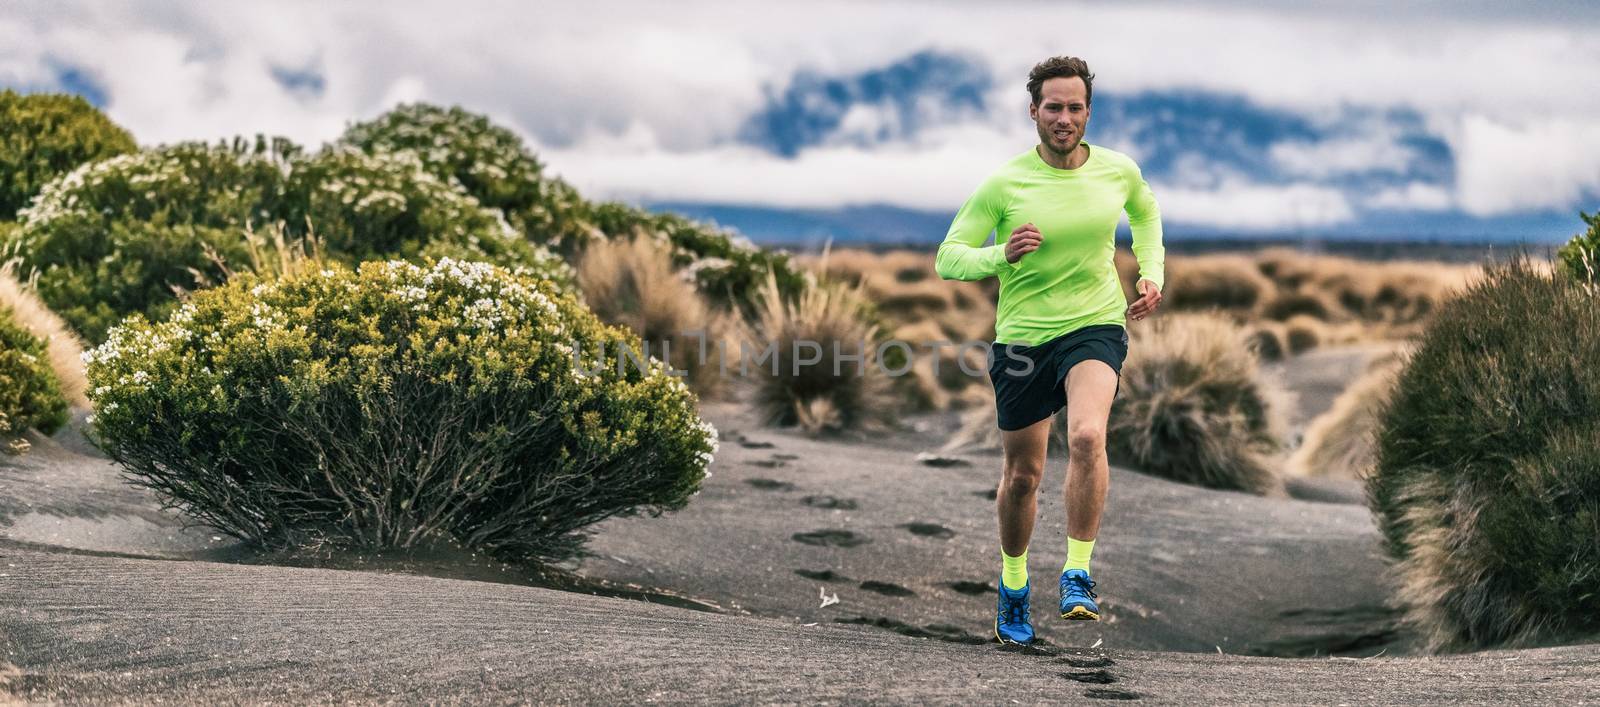 Trail run man athlete runner running marathon in desert landscape mountain hills summer background. Fitness and sports lifestyle by Maridav